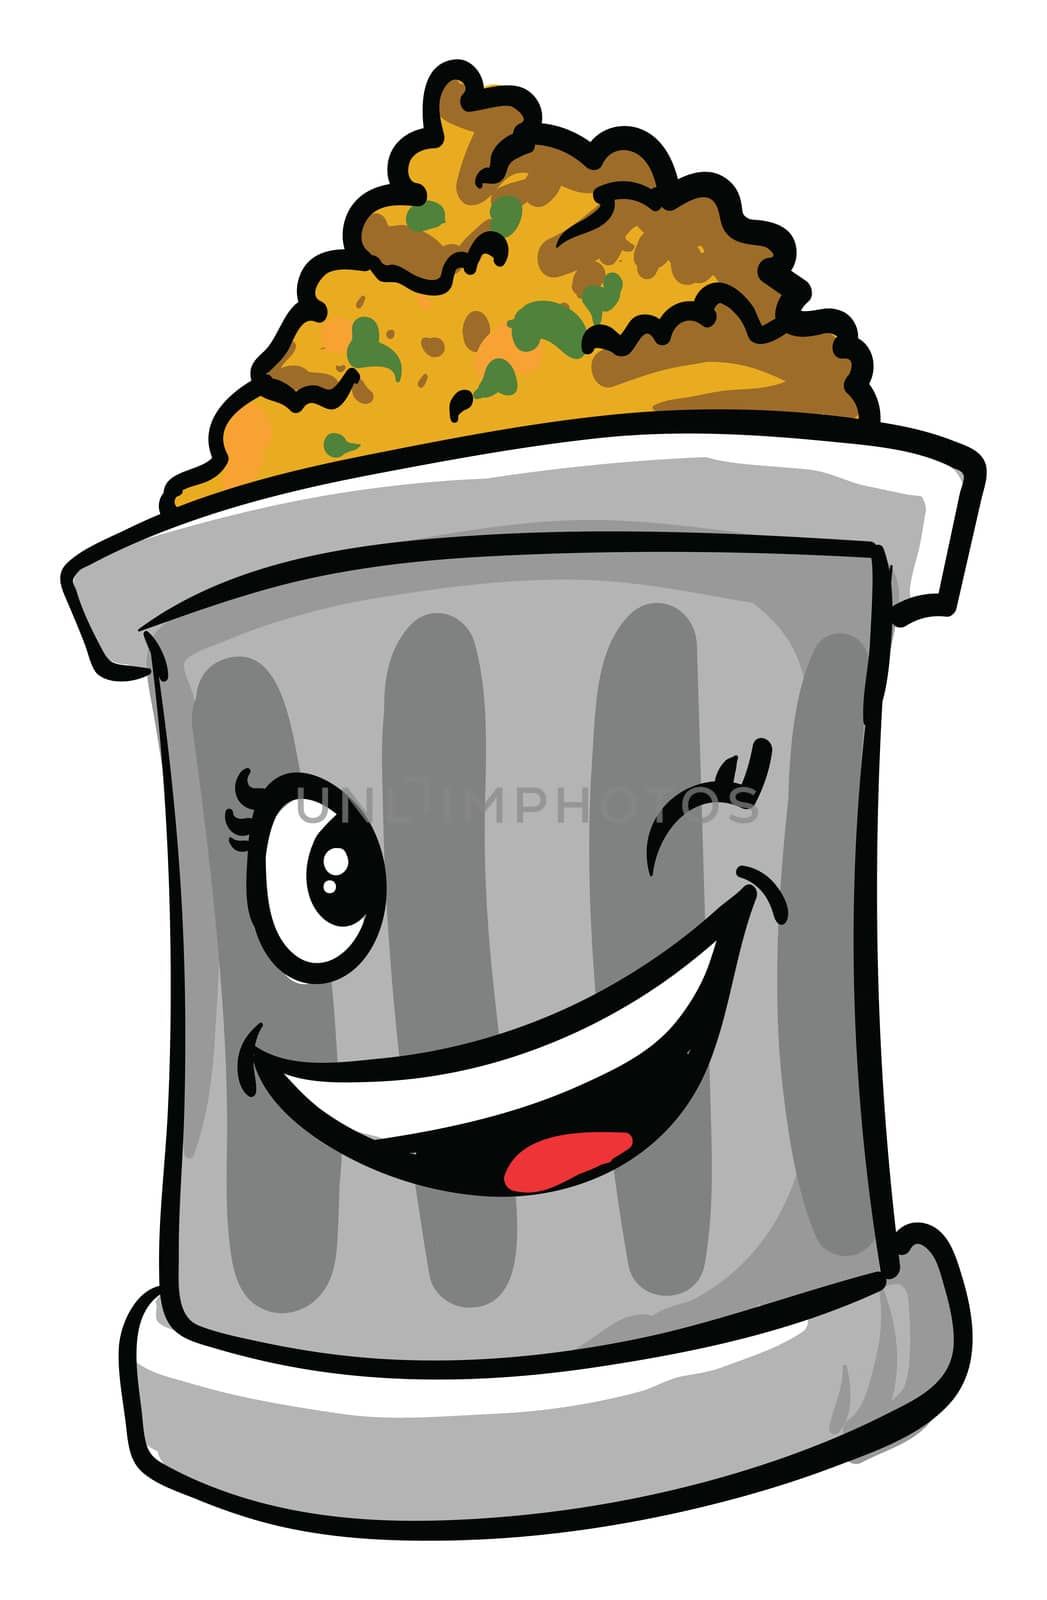 Trash can full of trash , illustration, vector on white background